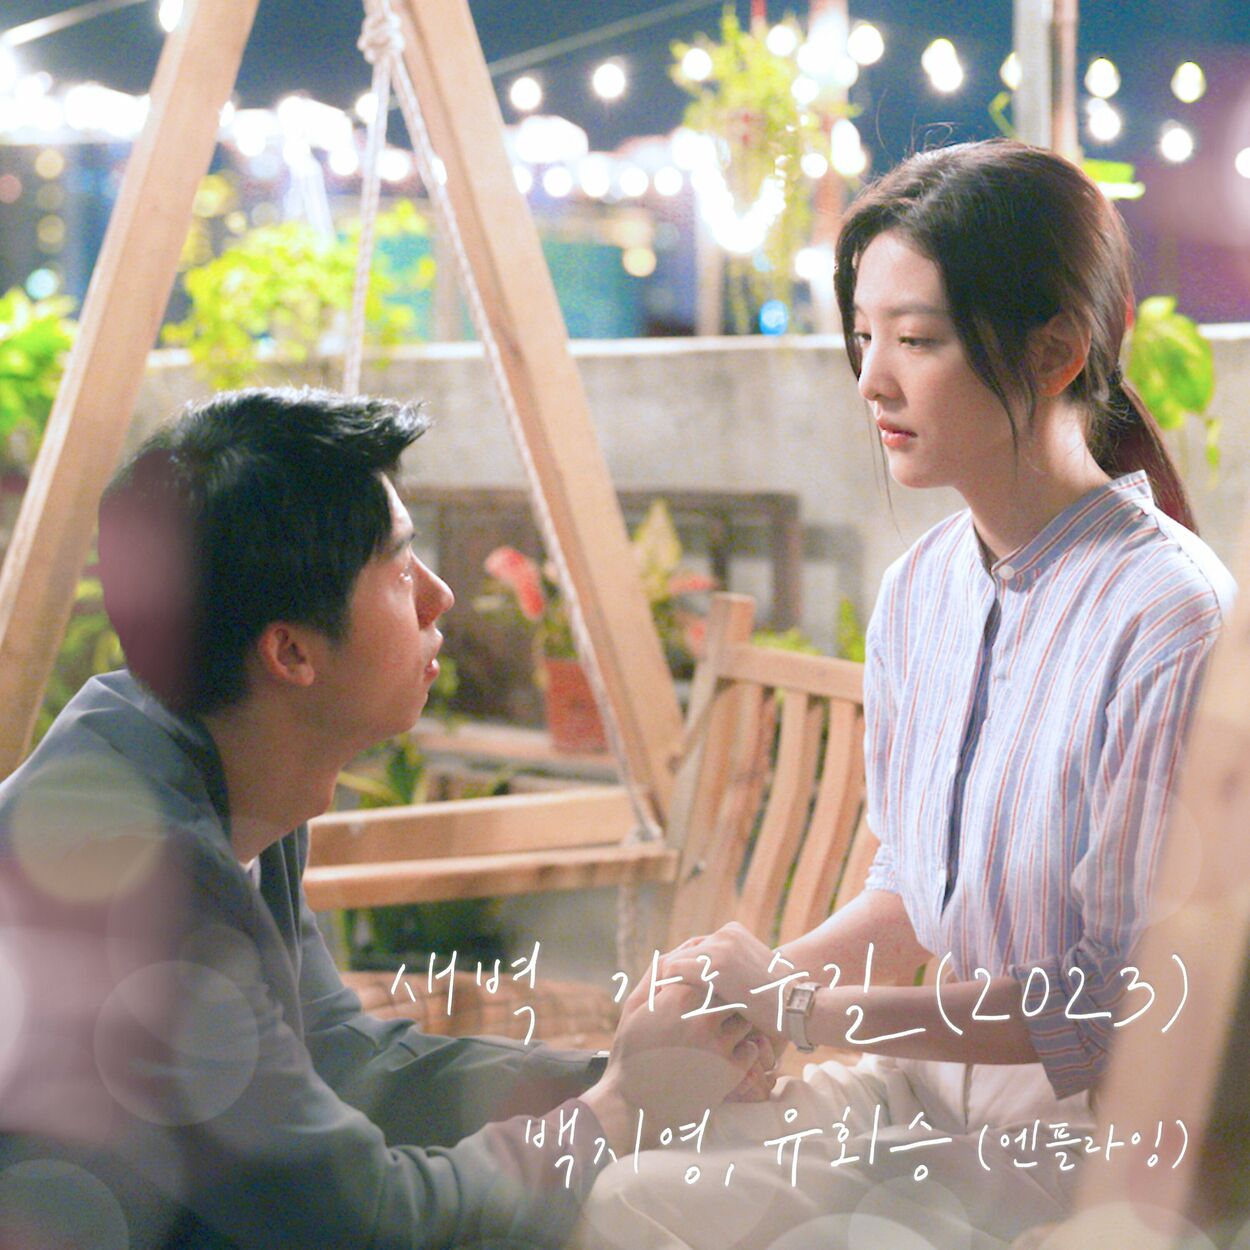 Baek Z Young, Yoo Hwe Seung (N.Flying) – Garosugil At Dawn (2023) (My love X Baek Z Young, Yoo Hwe Seung (N.Flying)) – Single